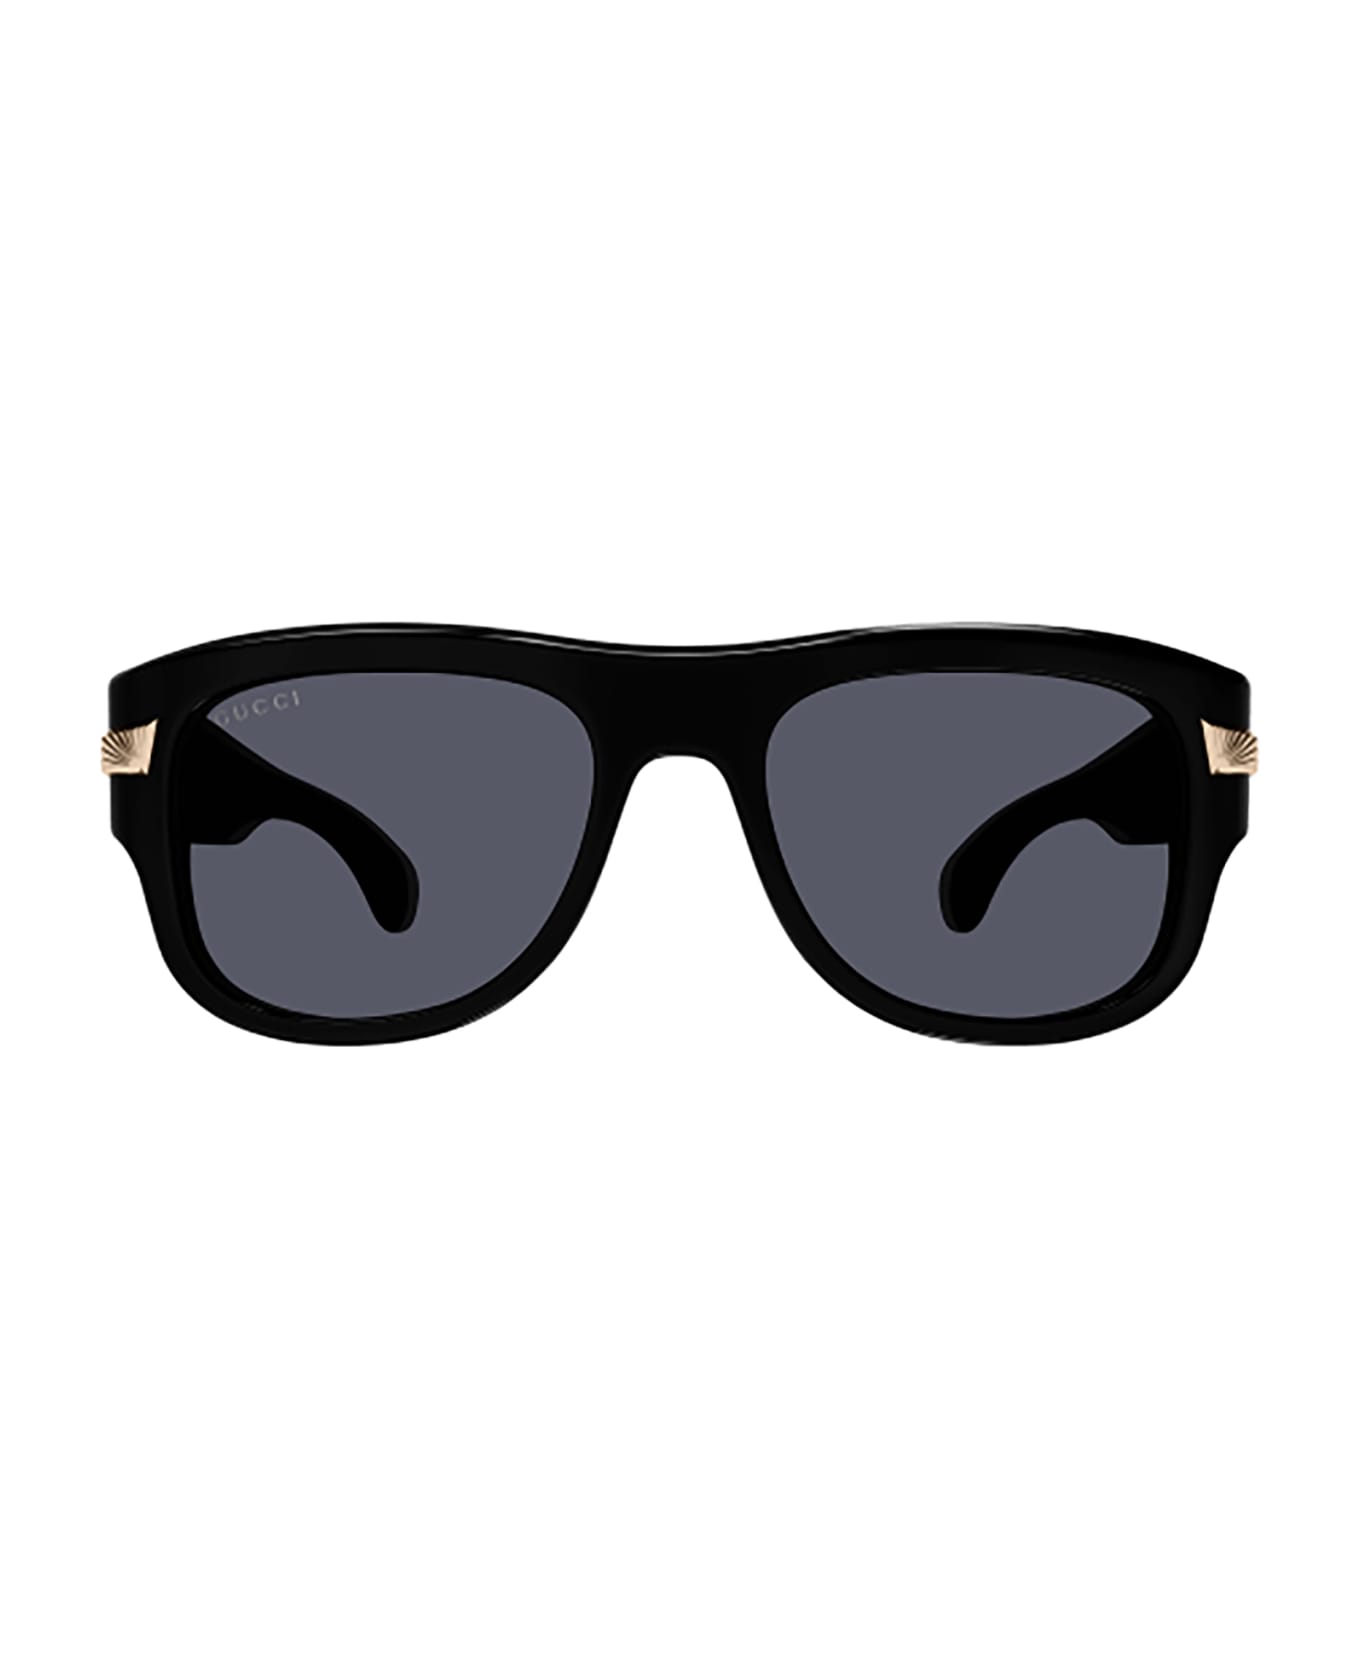 Gucci Eyewear Gg1517s Sunglasses - 001 black black grey サングラス